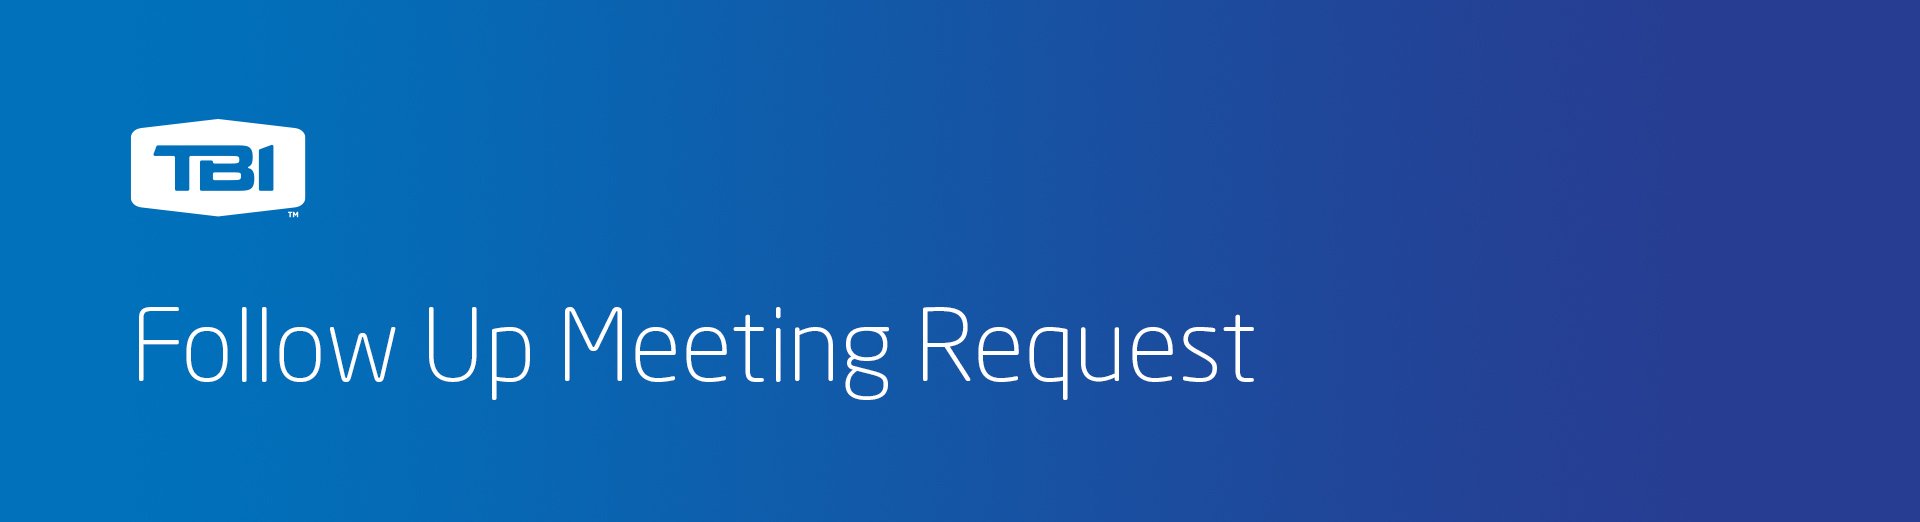 Meeting_Request_Header